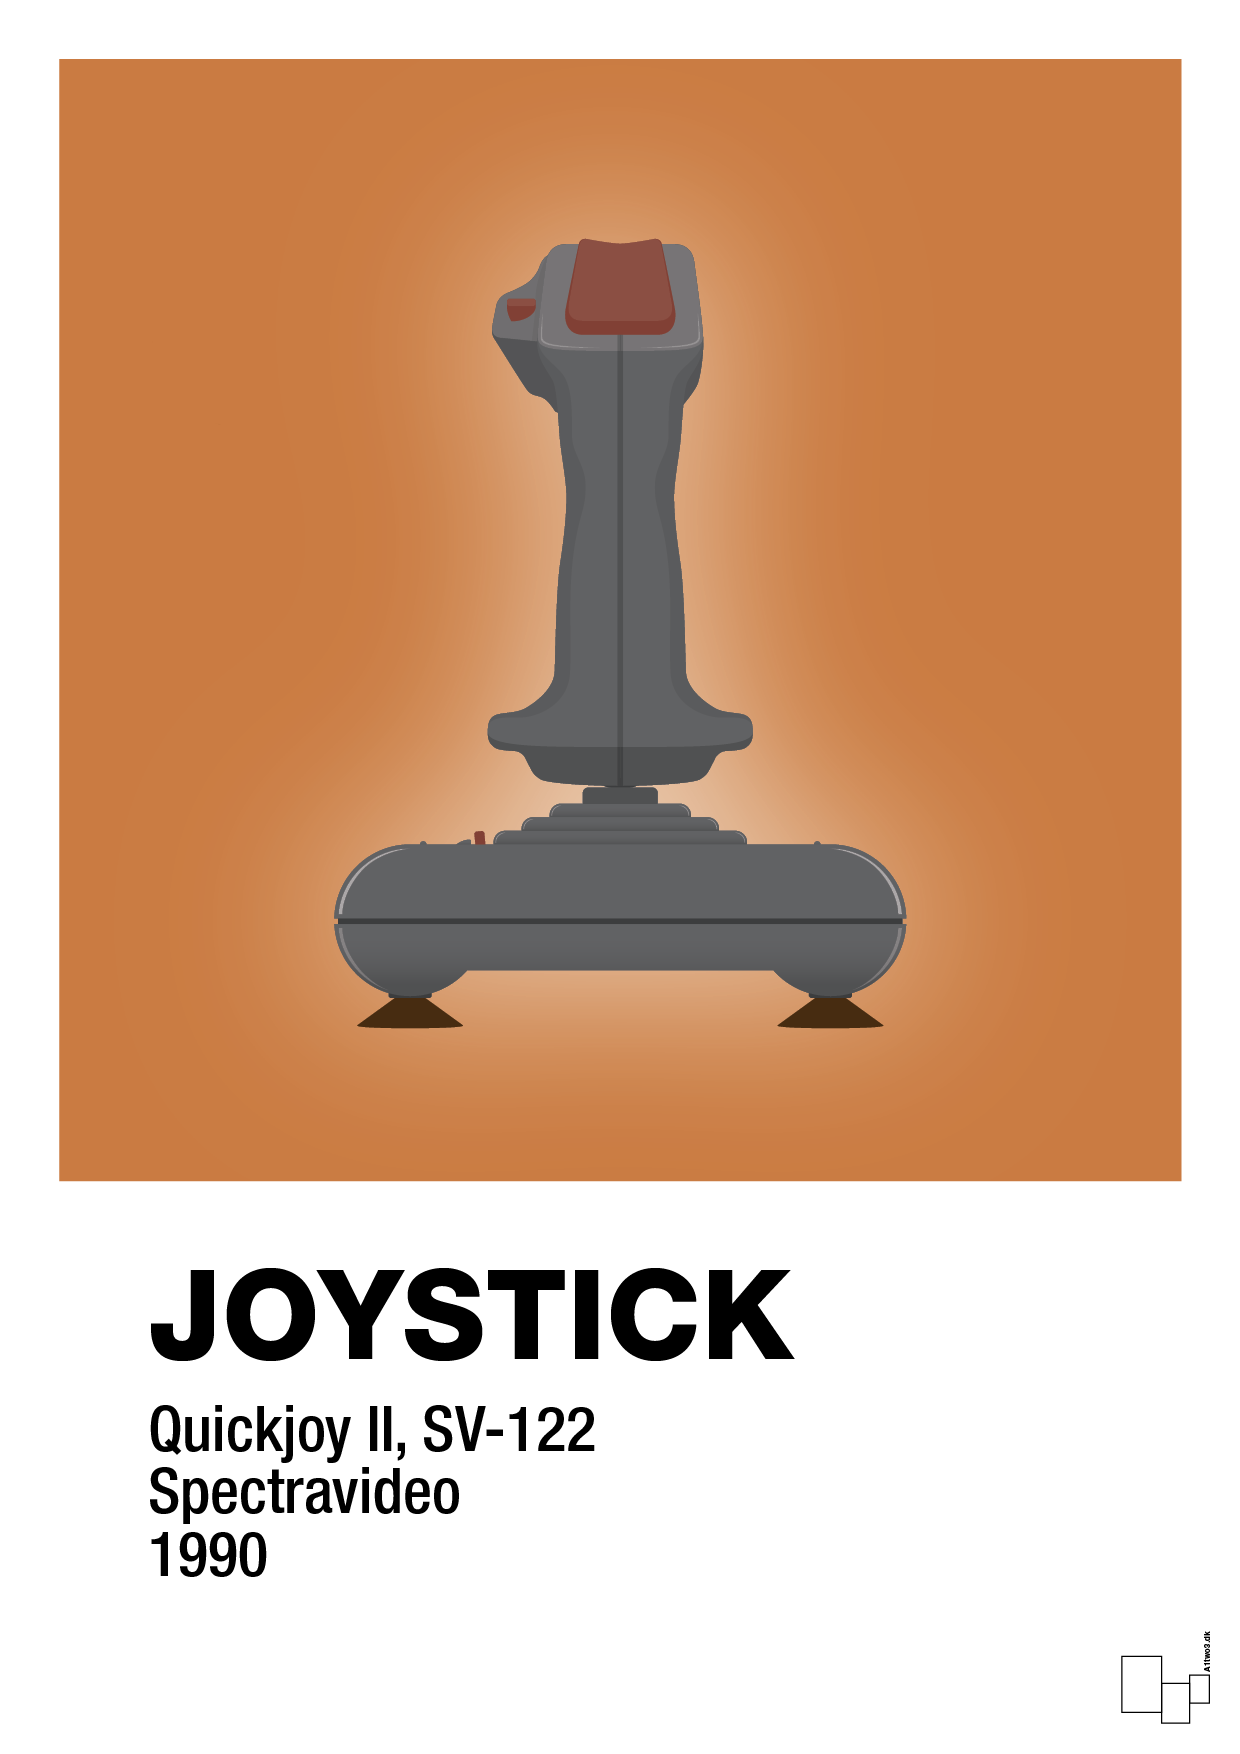 joystick quickjoy II - Plakat med Grafik i Rumba Orange